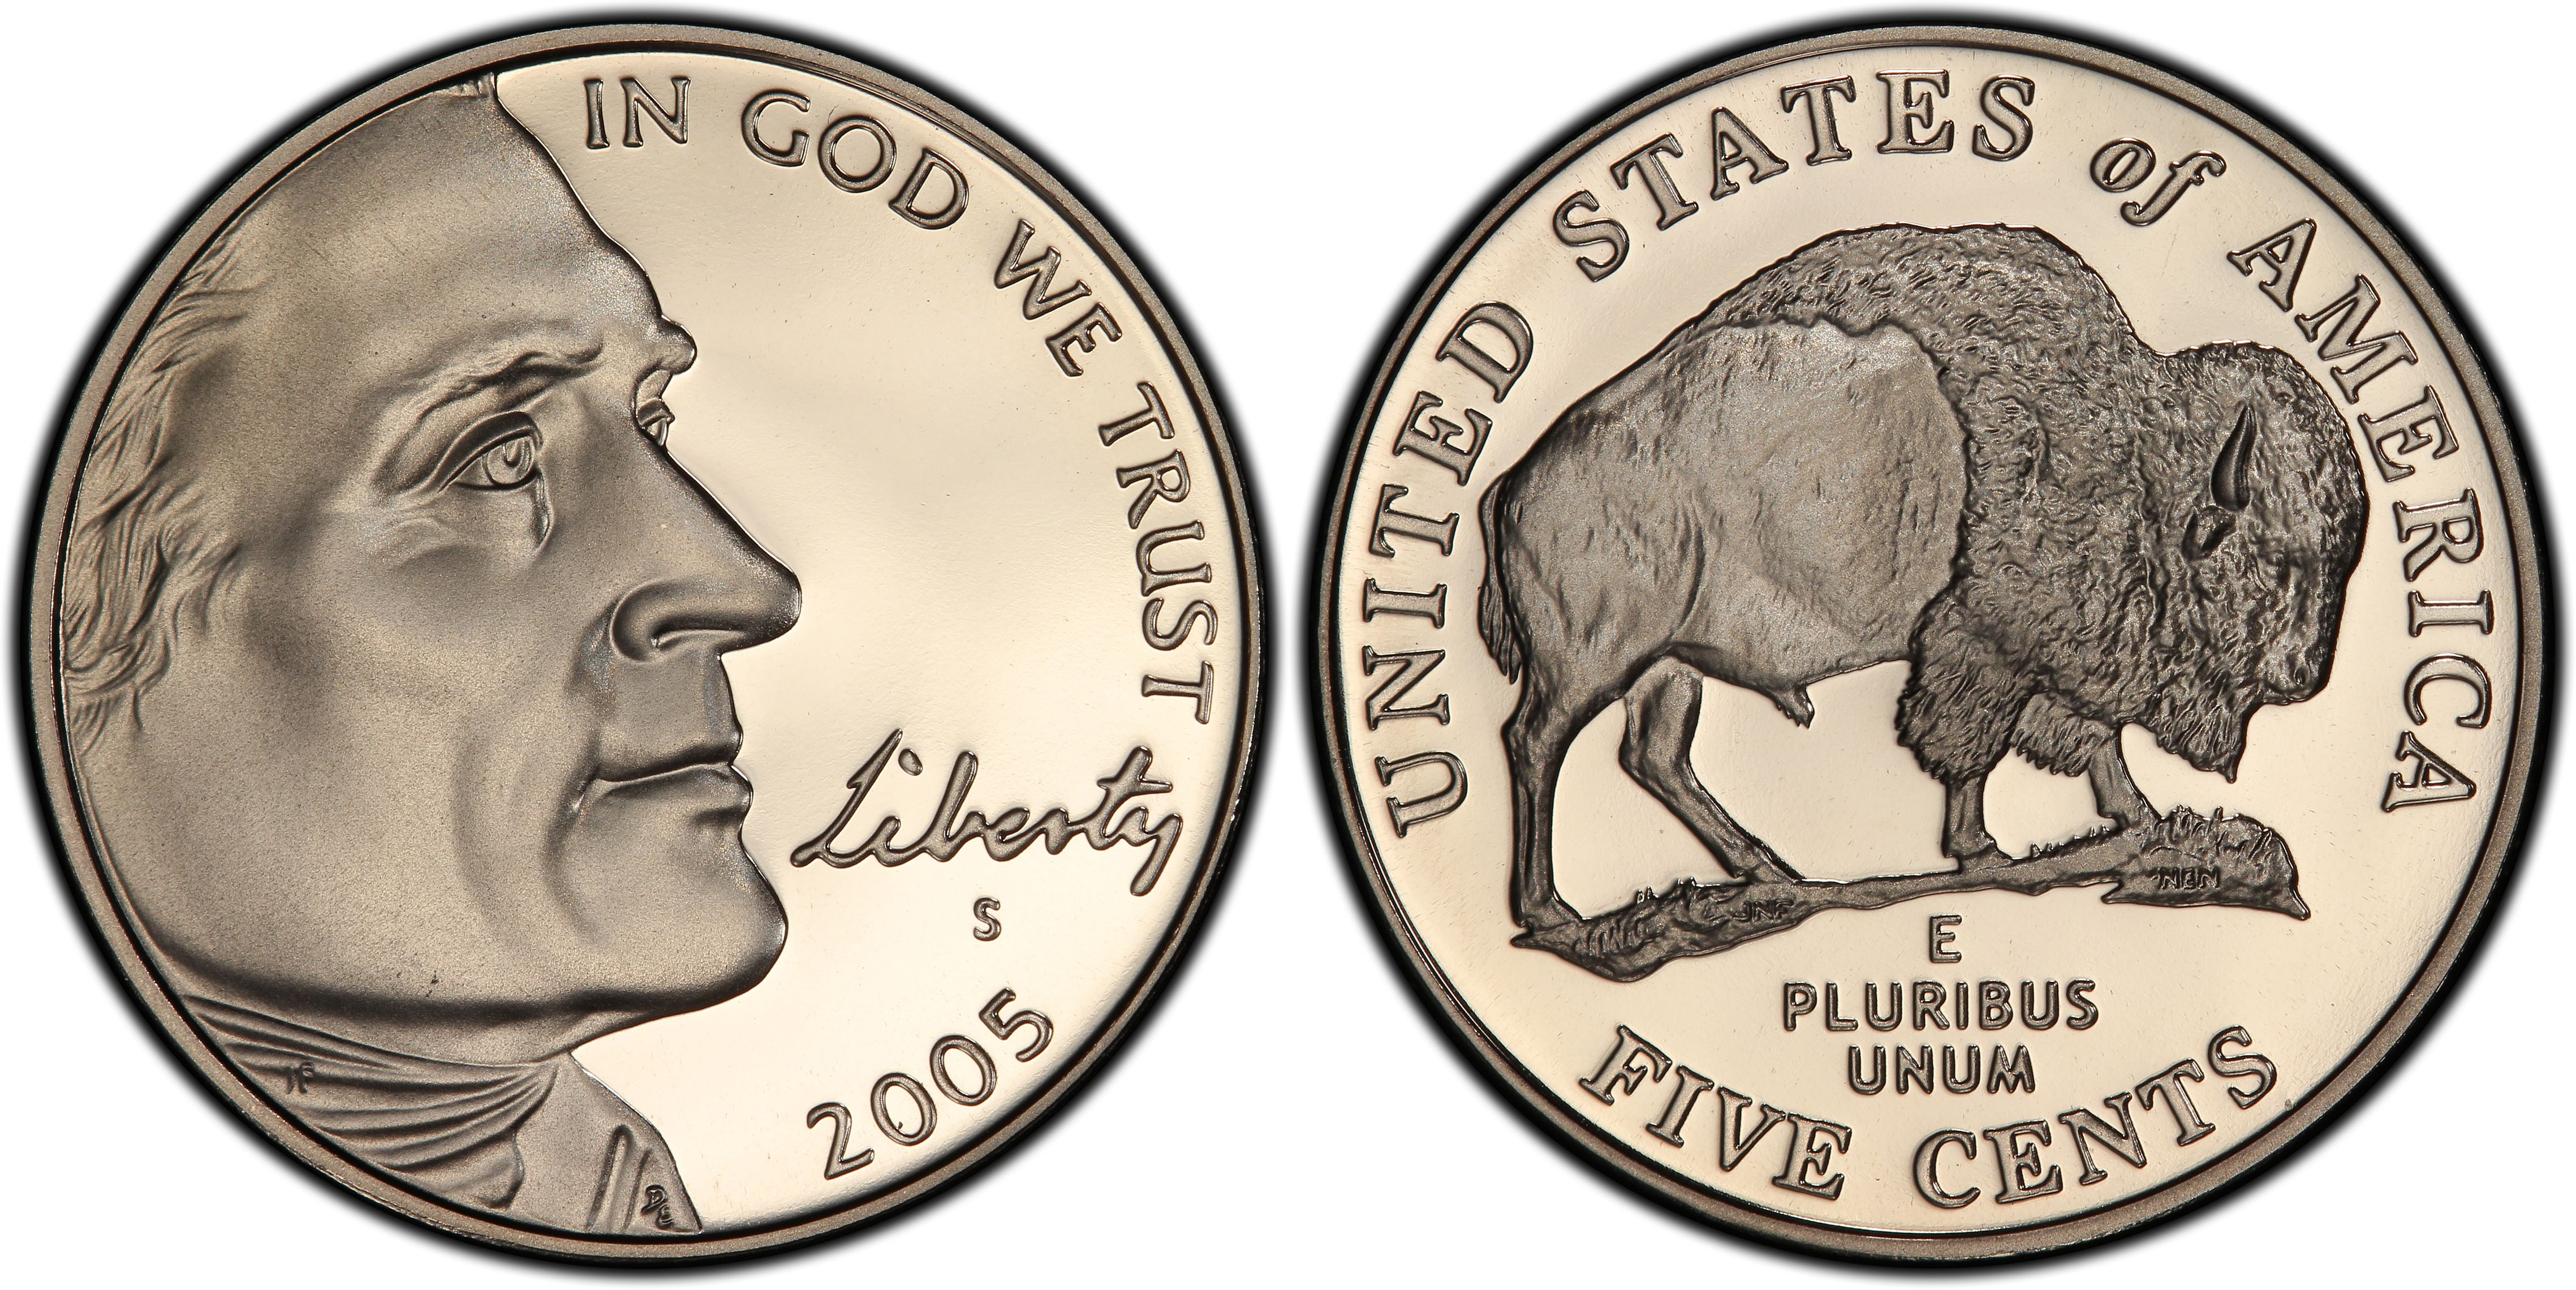 Proof Set 2005 S Jefferson Nickel Mint Proof ~ Bison ~ From Original U.S